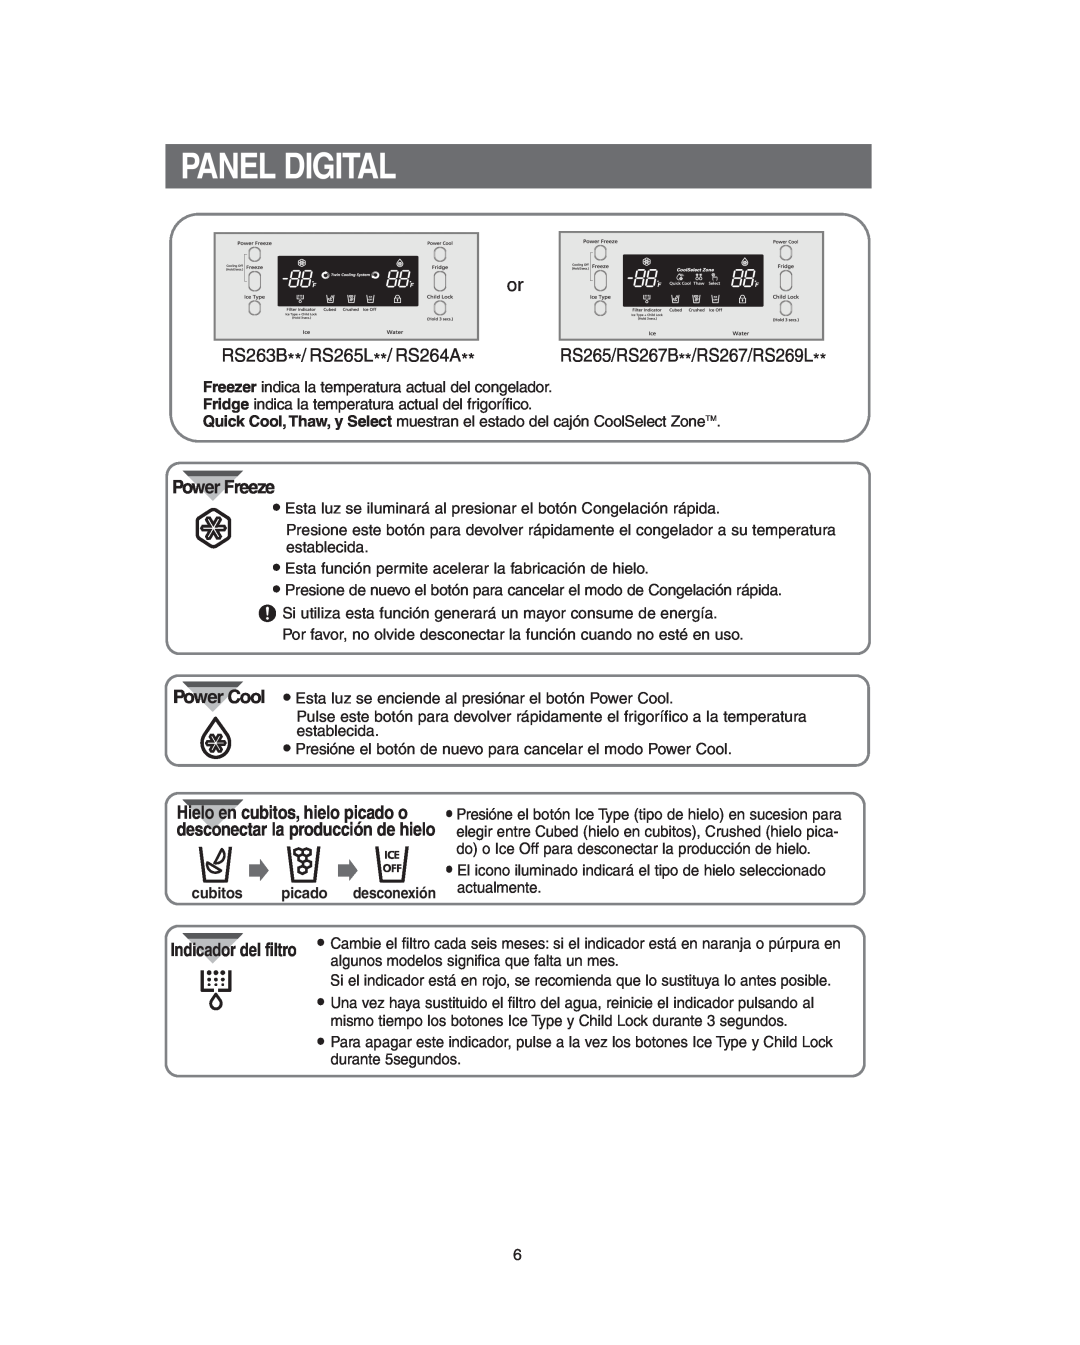 Samsung Panel Digital, RS263B **/ RS265L **/ RS264A, Power Freeze, cubitos picado desconexión, Indicador del filtro 